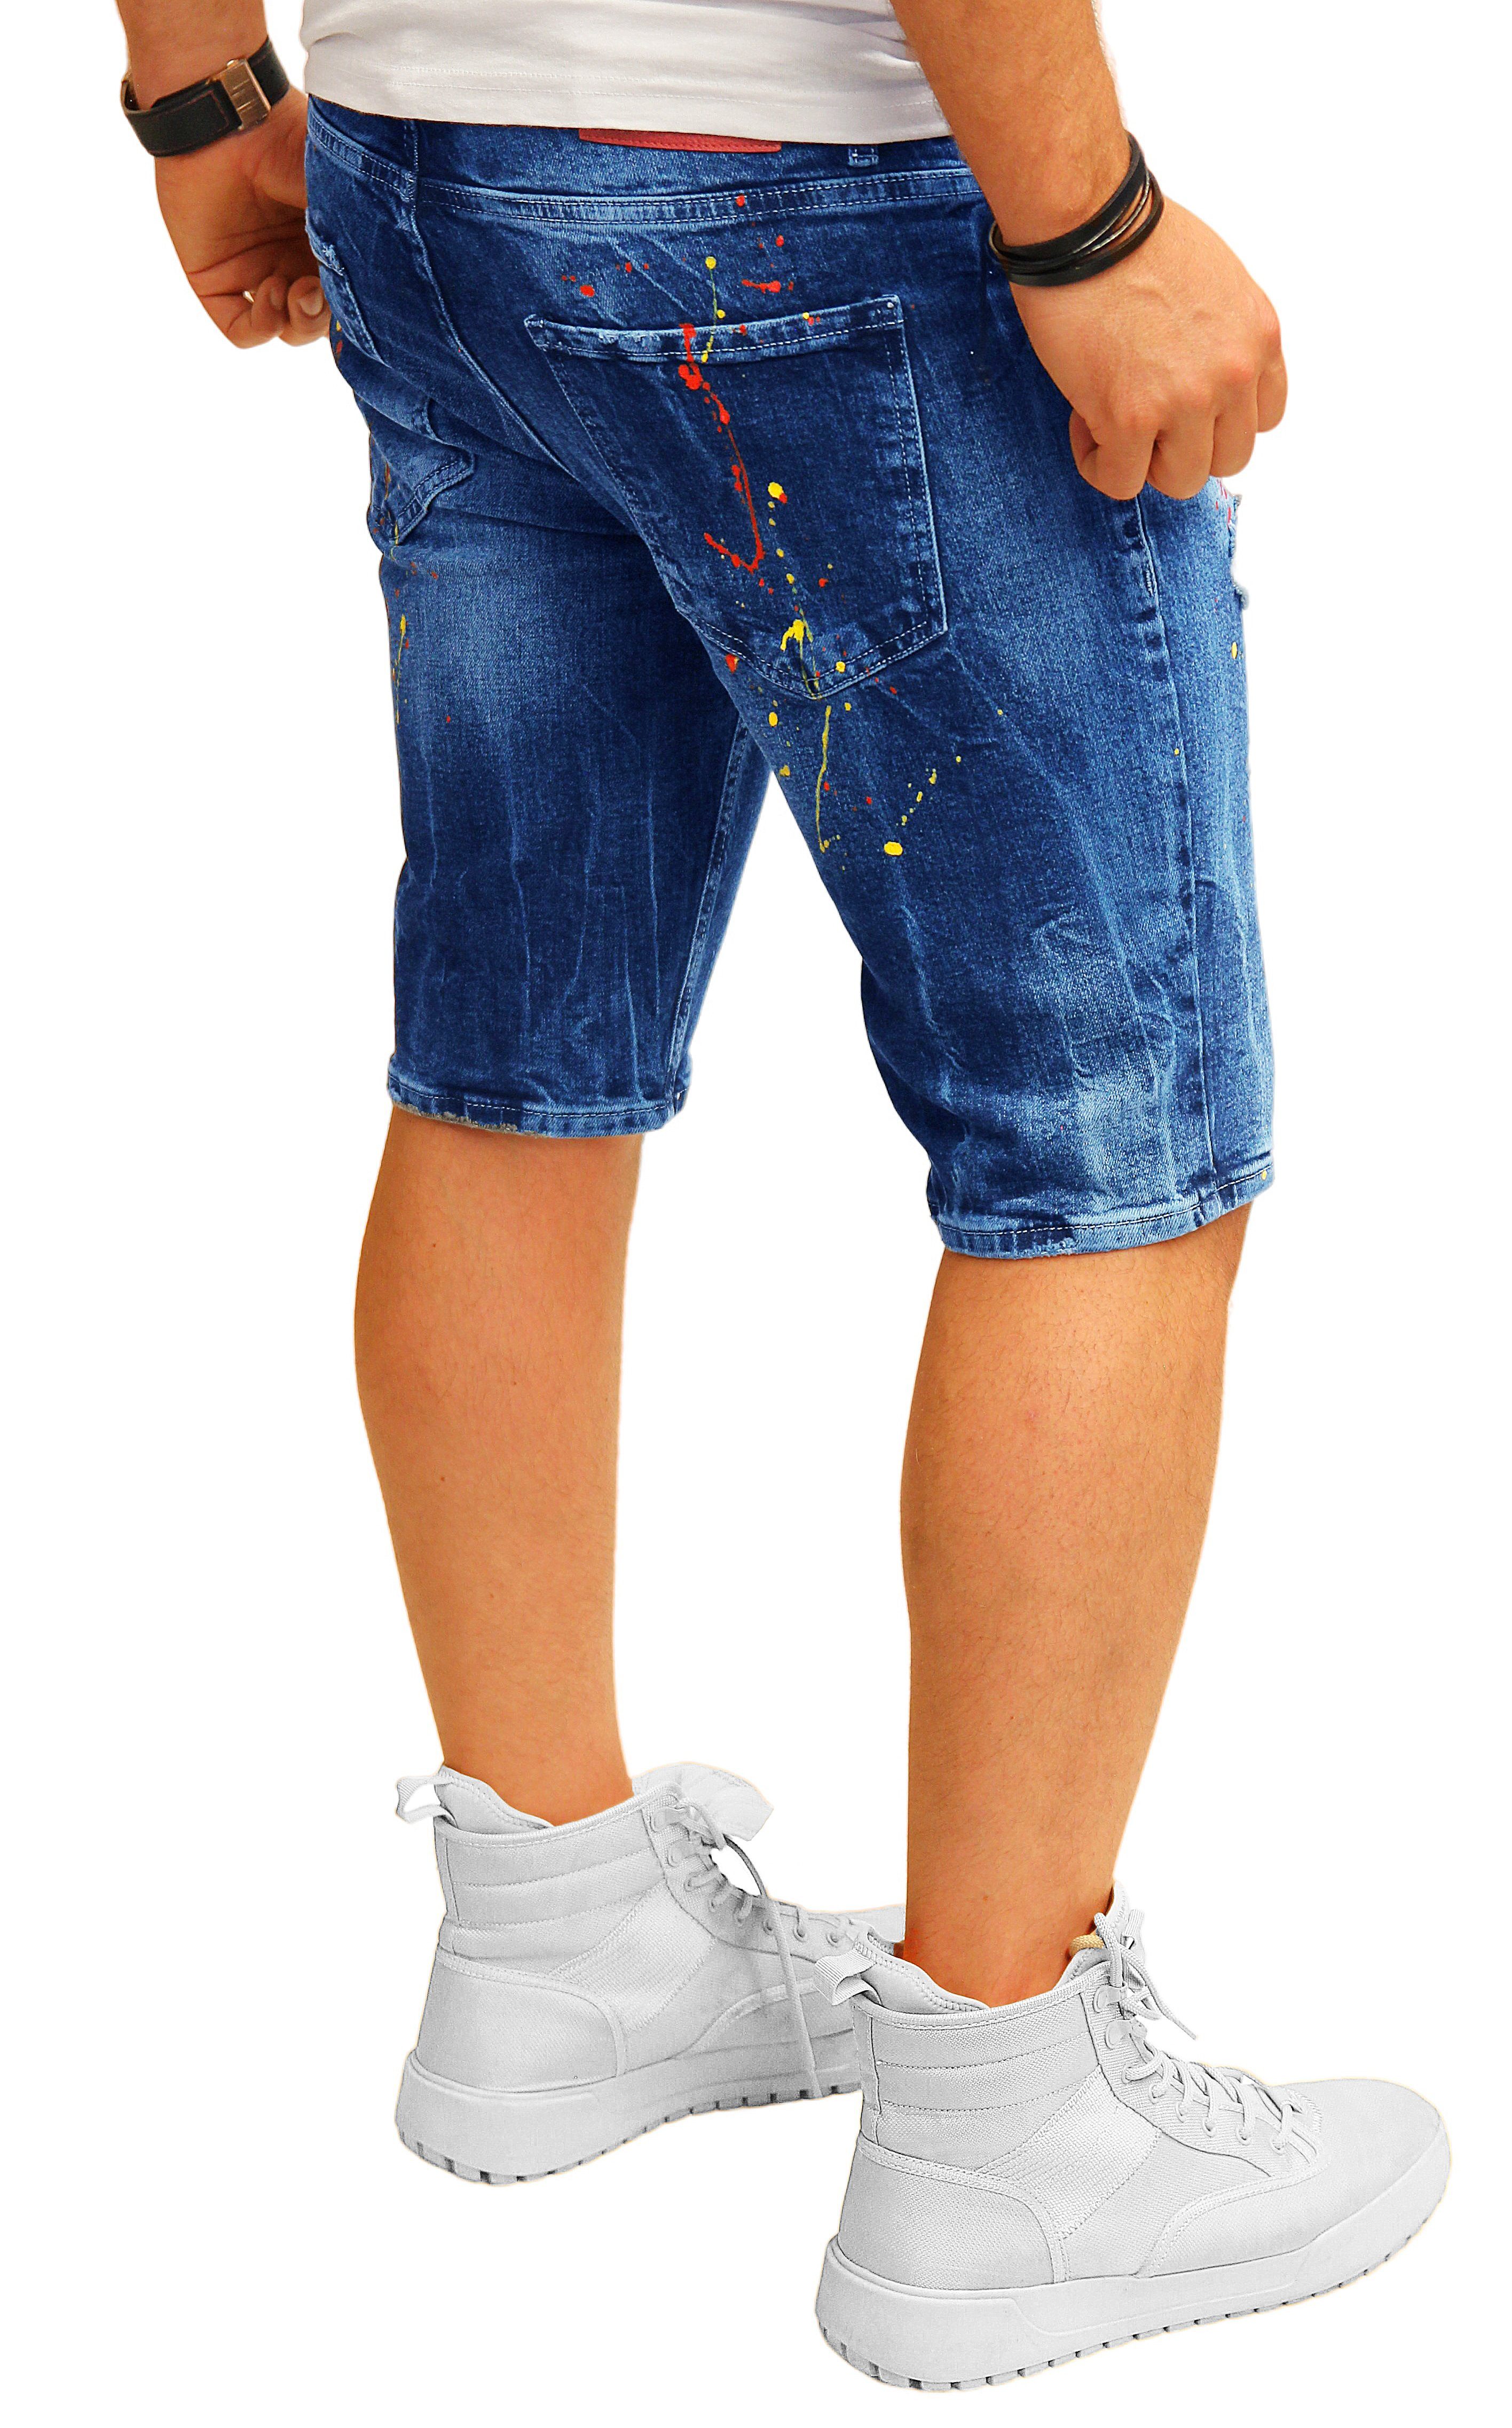 (B.703) RMK 5 Jeansshorts Pocket mit Jeans Blue short Farbspritzern Blau